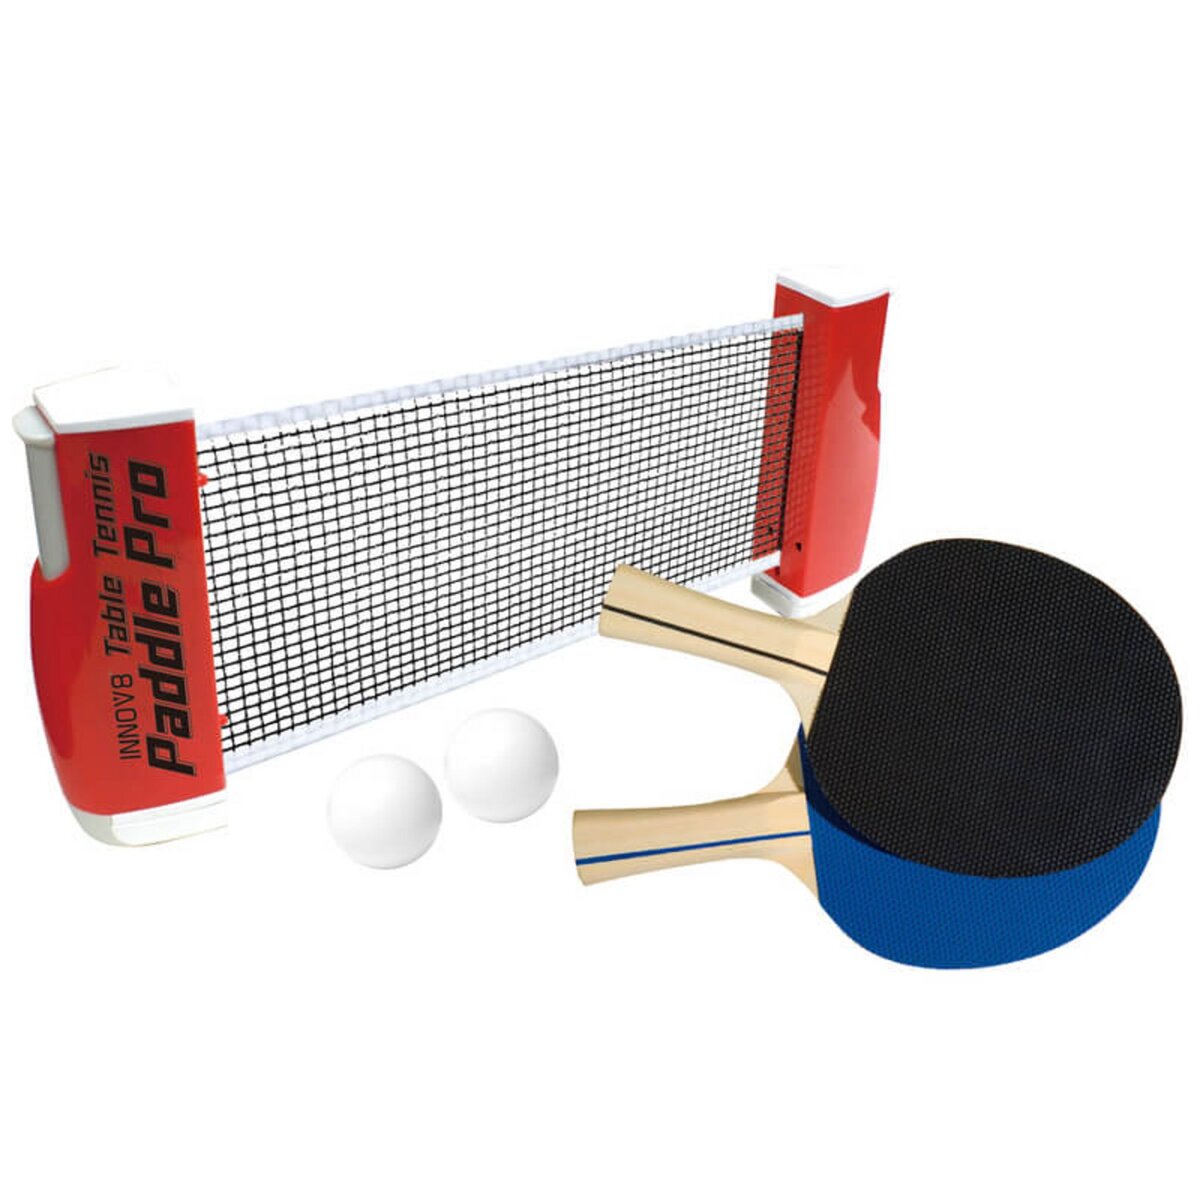 PICWICTOYS Set de ping-pong portable